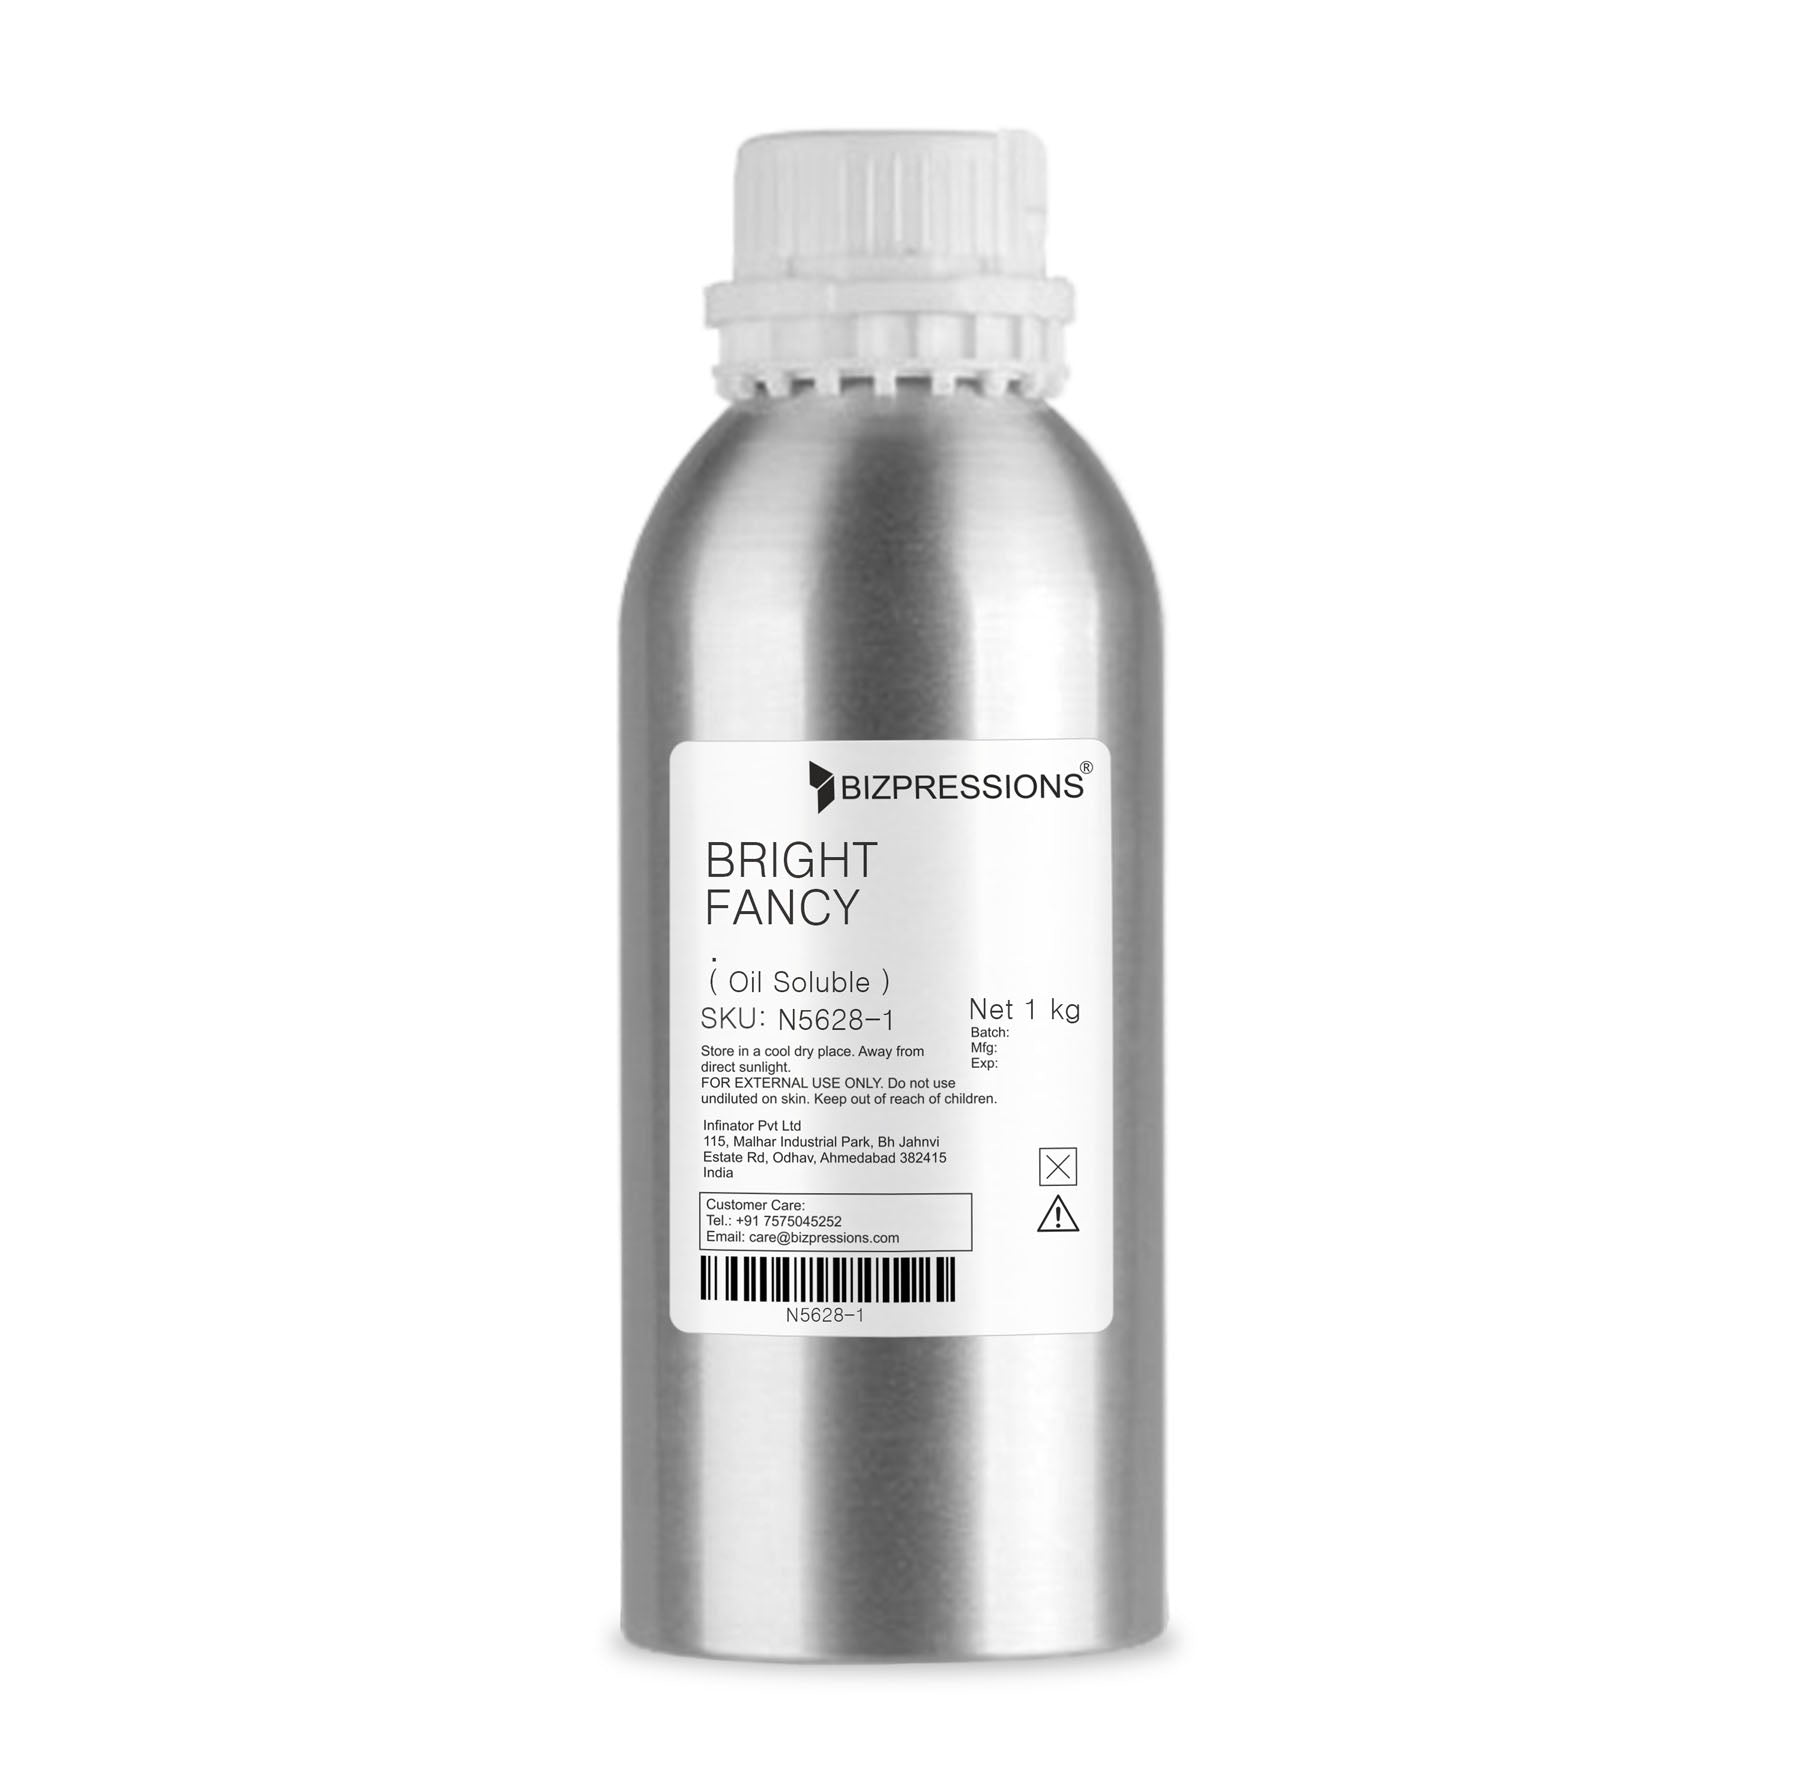 BRIGHT FANCY - Fragrance ( Oil Soluble ) - 1 kg